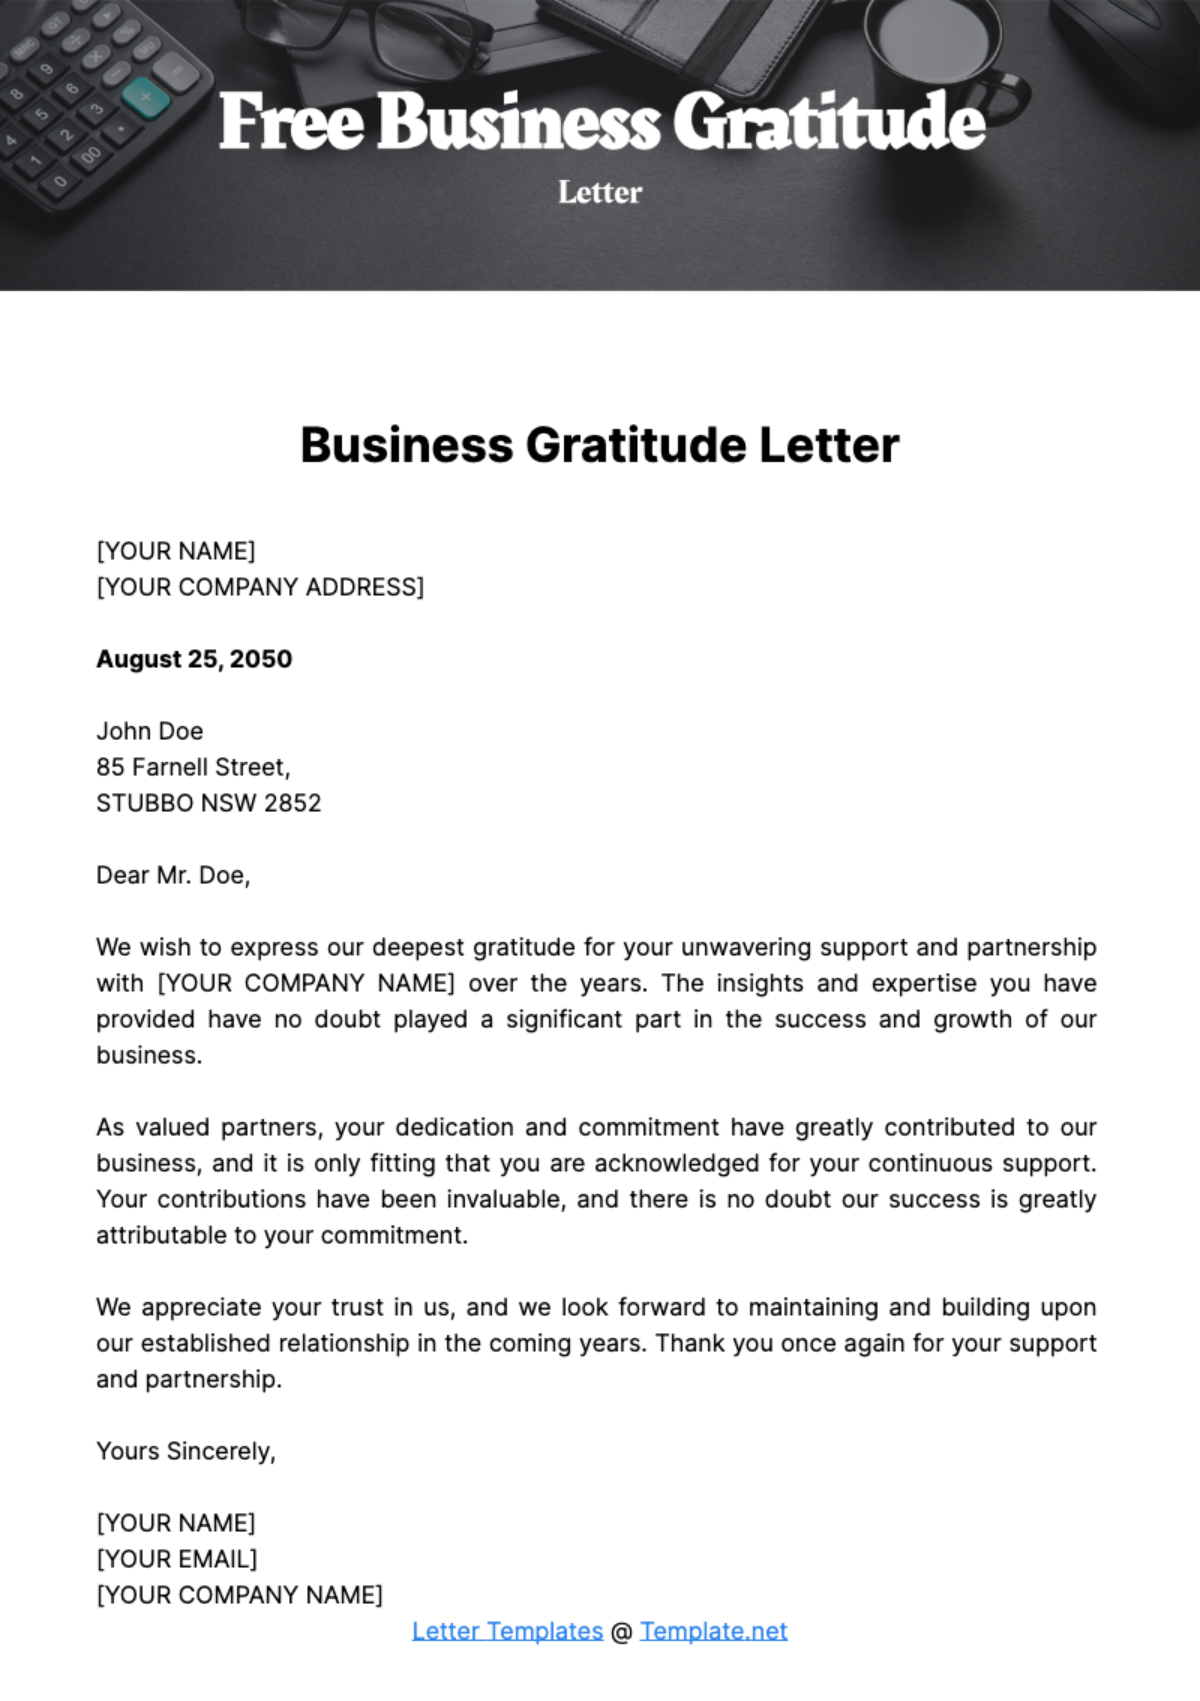 Free Business Gratitude Letter Template